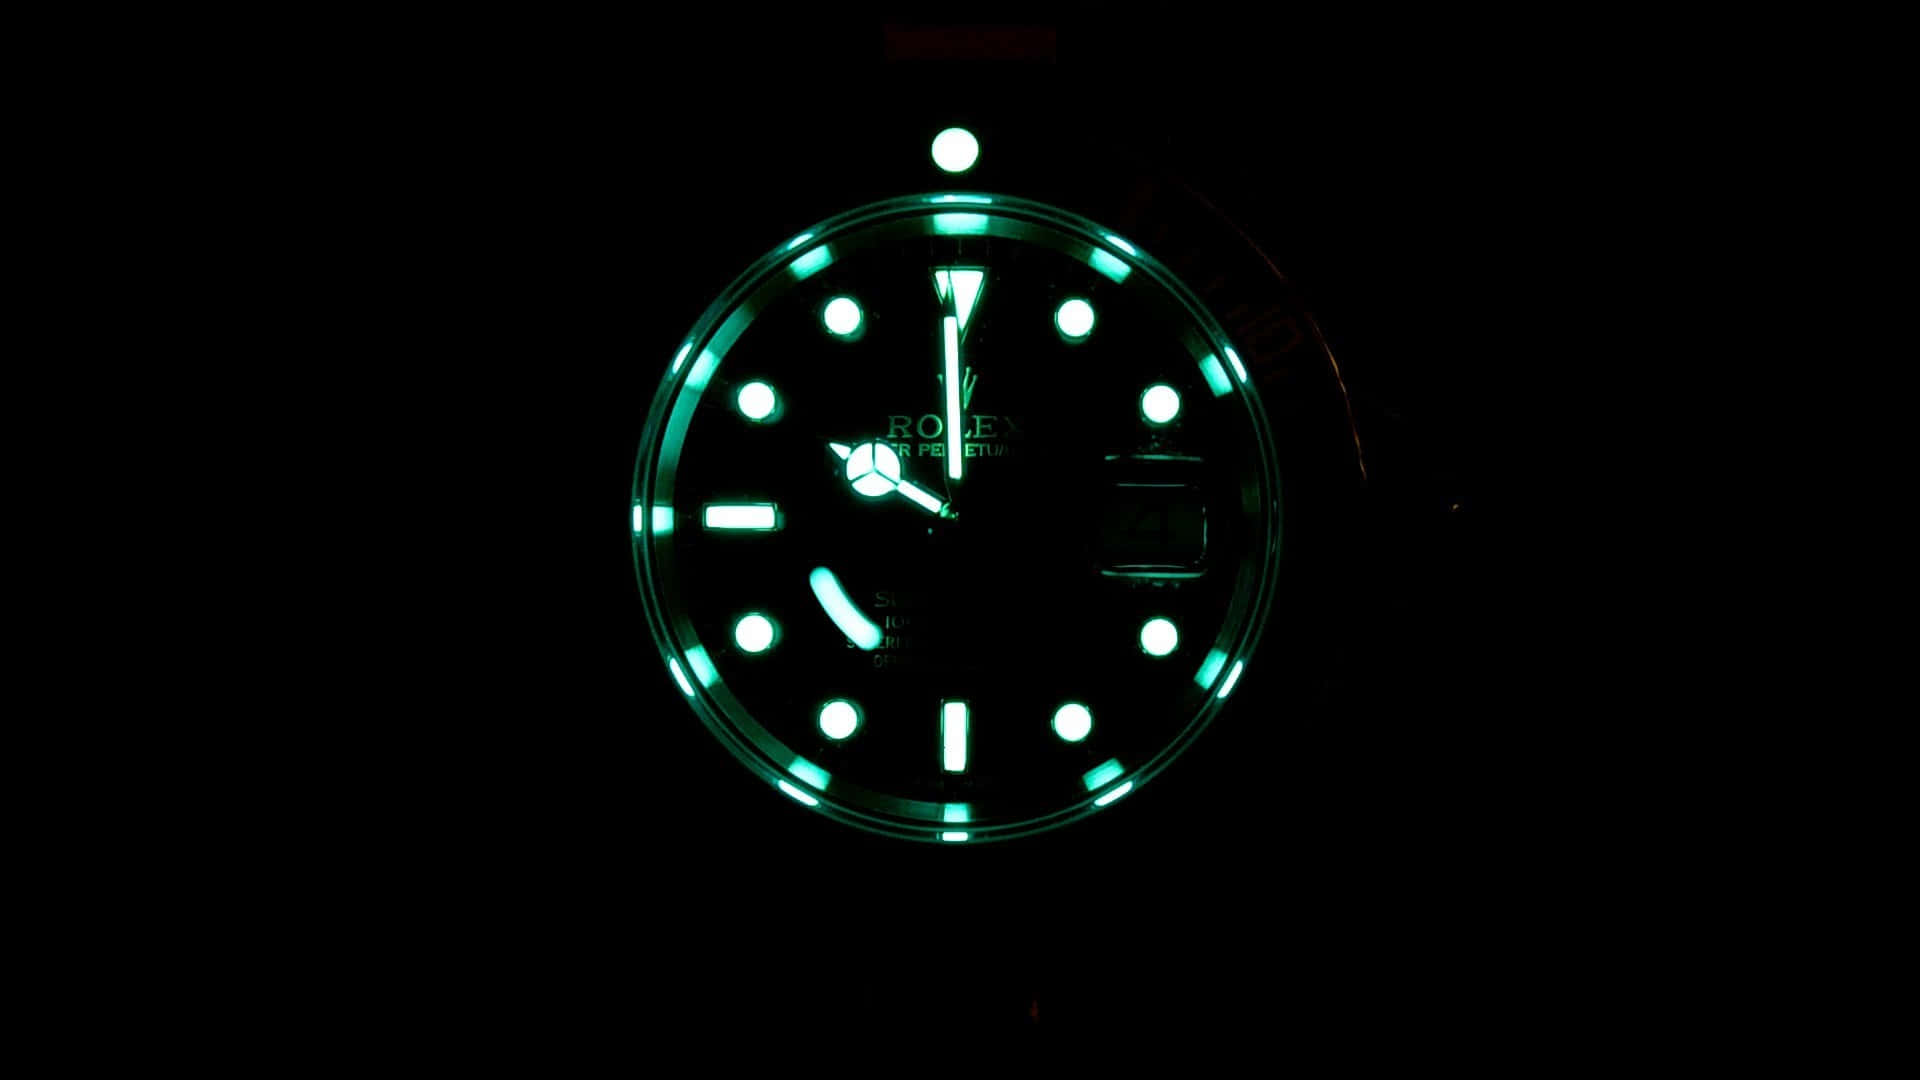 Timeless Luxury - A stunning Rolex watch displayed on a sleek black background.